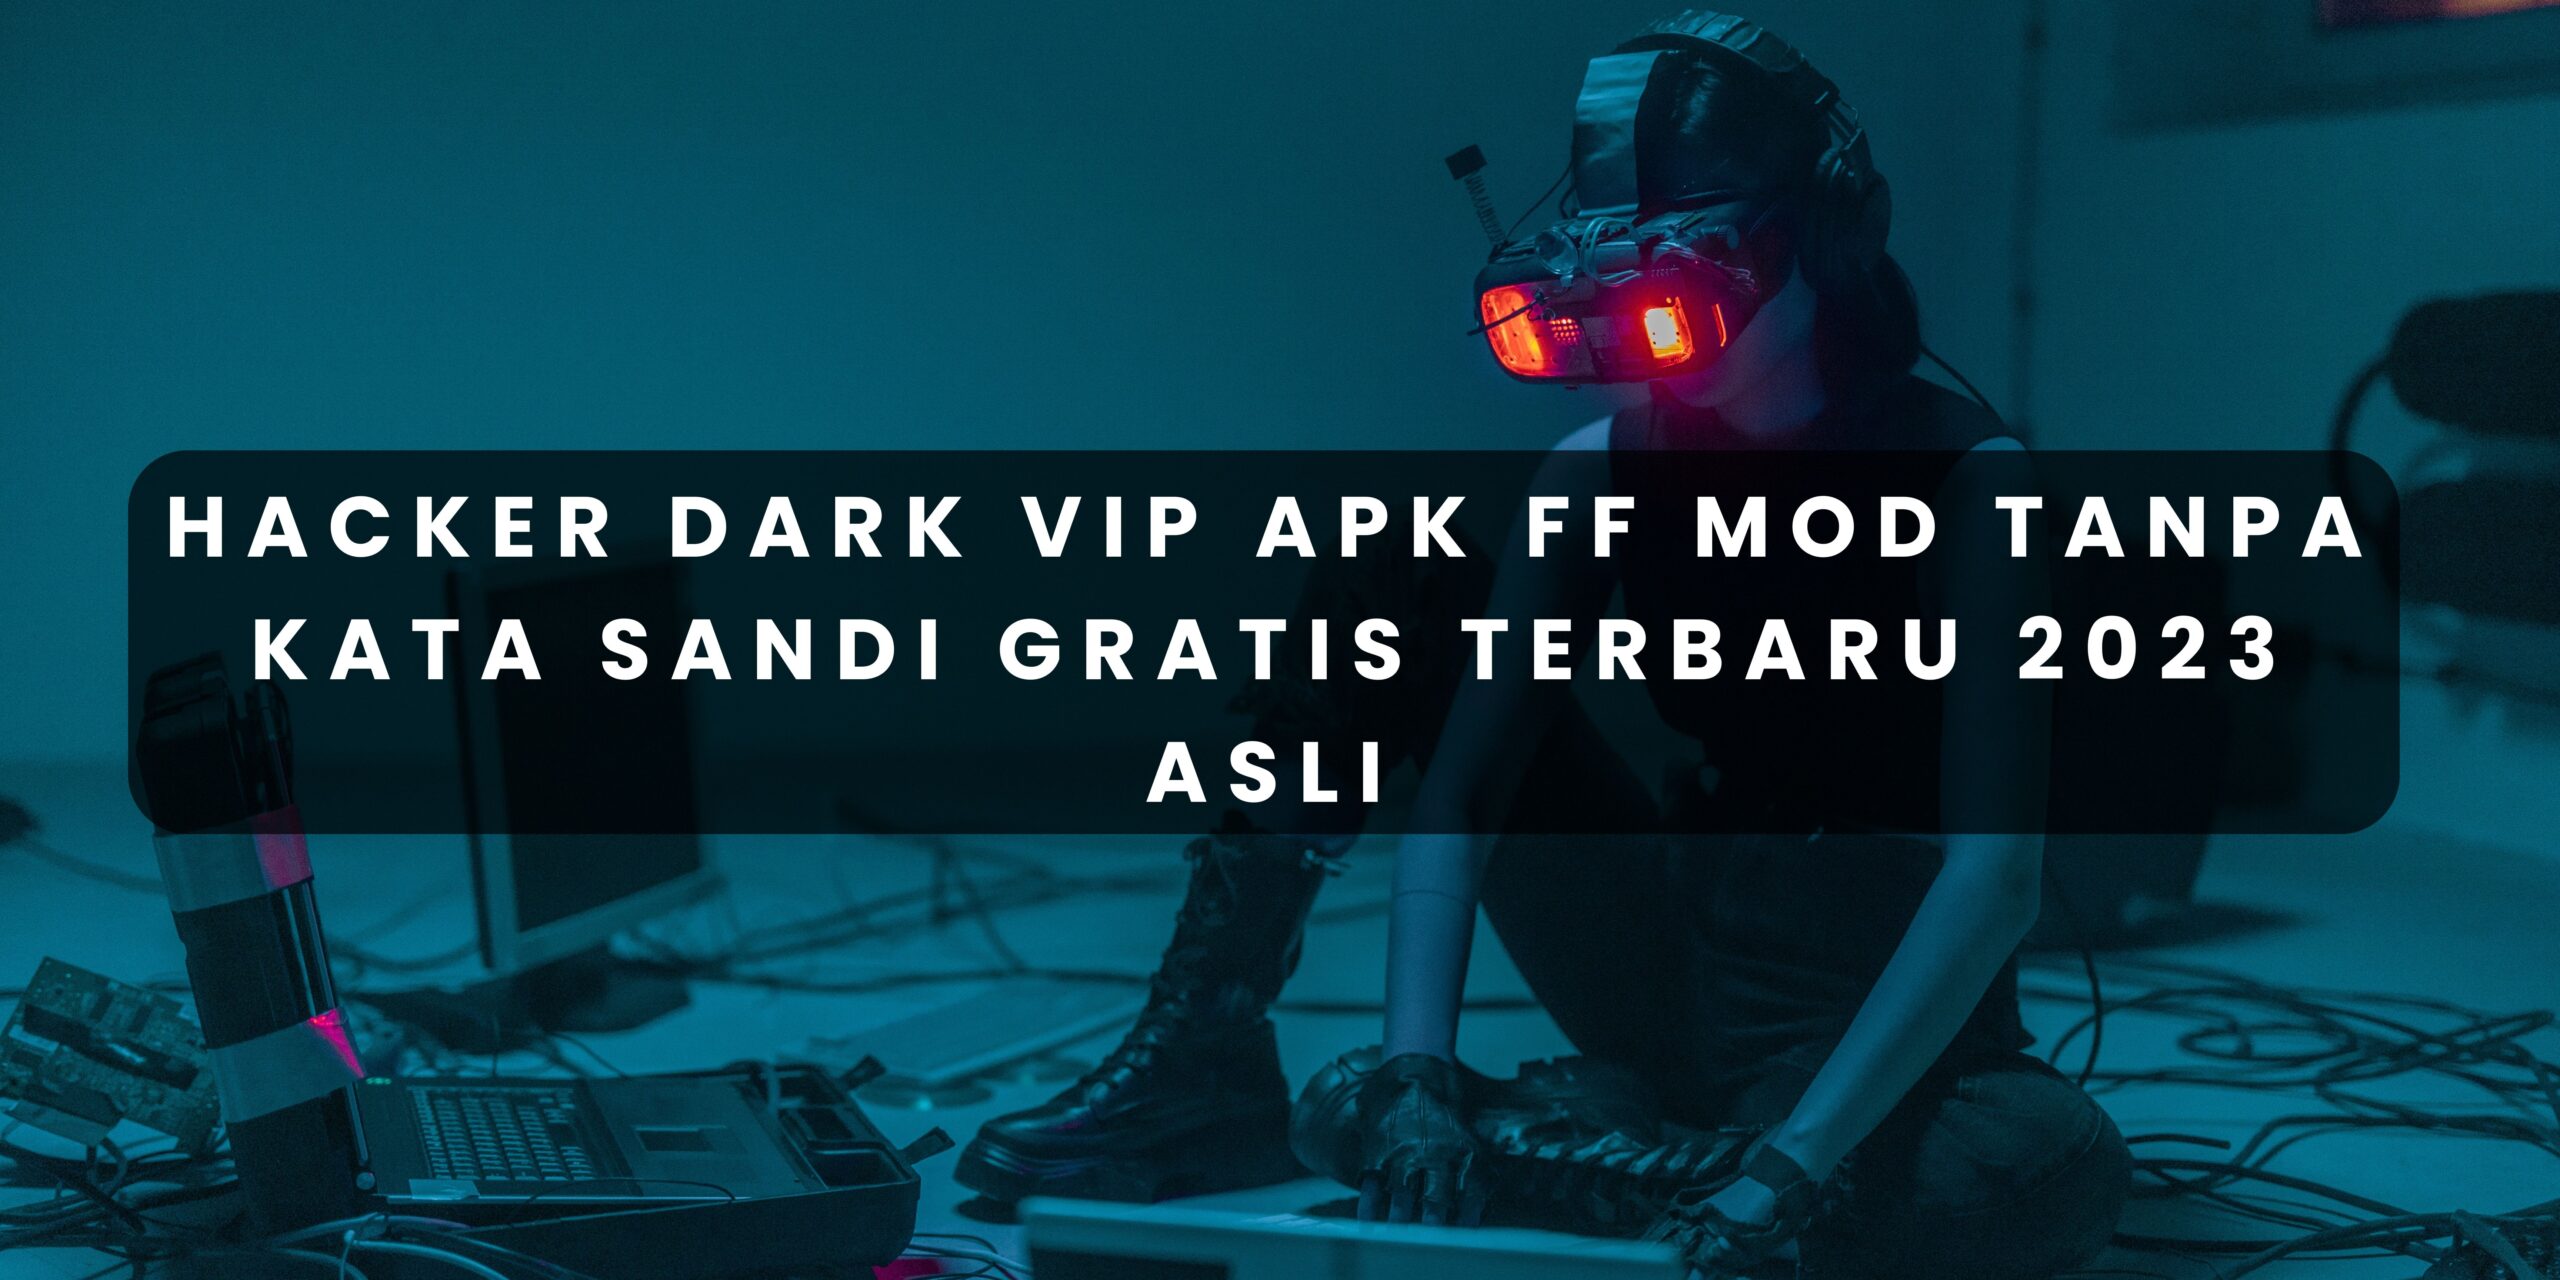 Hacker Dark VIP Apk FF Mod Tanpa Kata Sandi Gratis Terbaru 2023 Asli